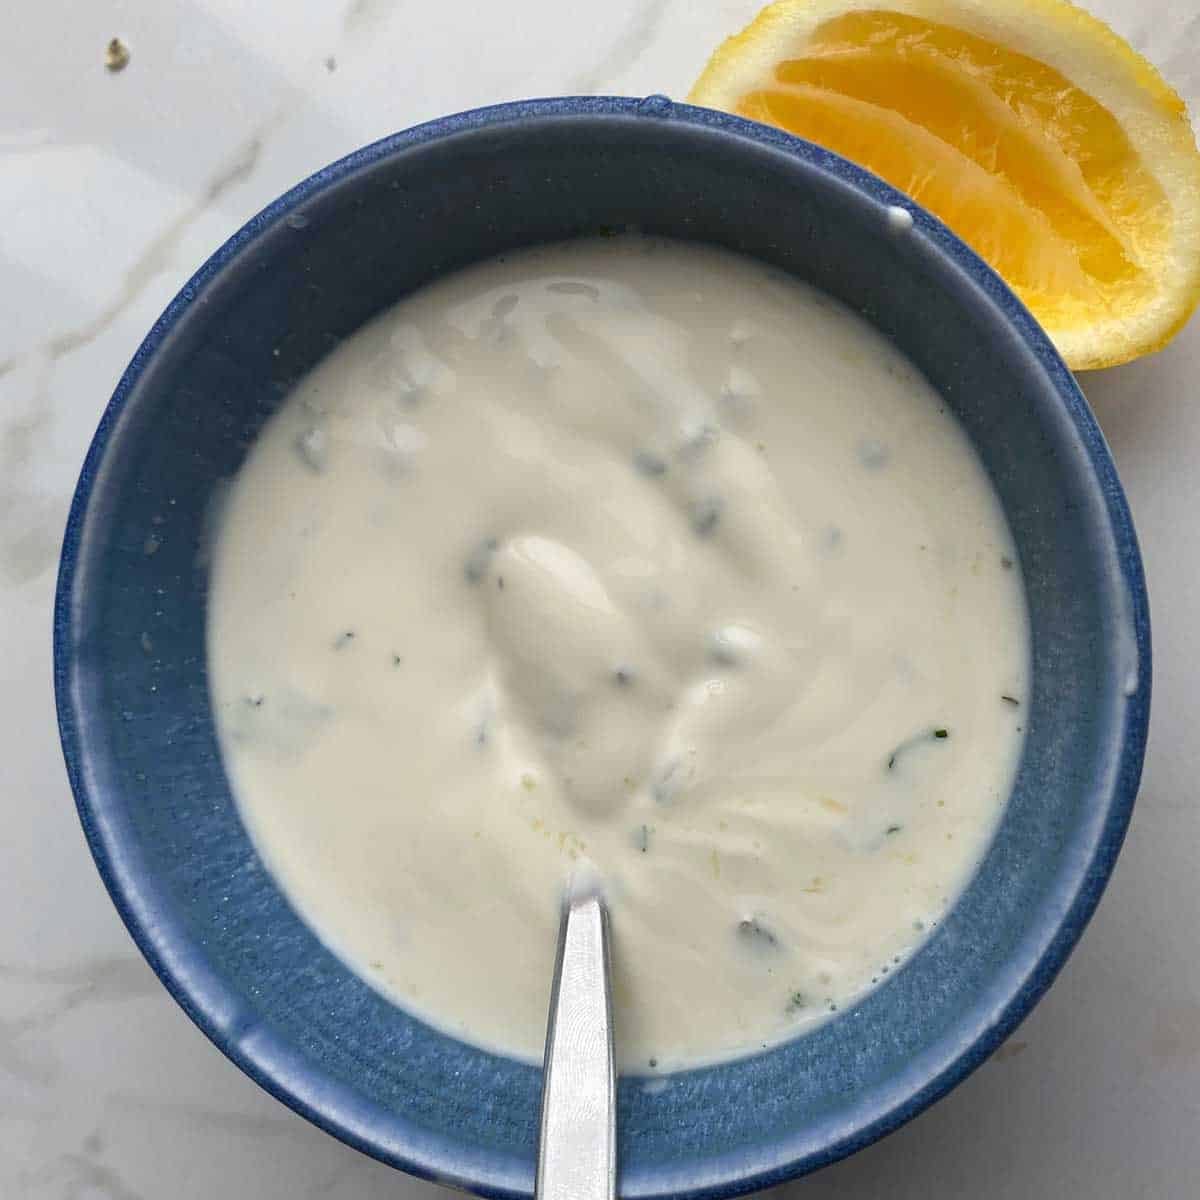 Mint yoghurt dressing a blue bowl next to a piece of lemon.